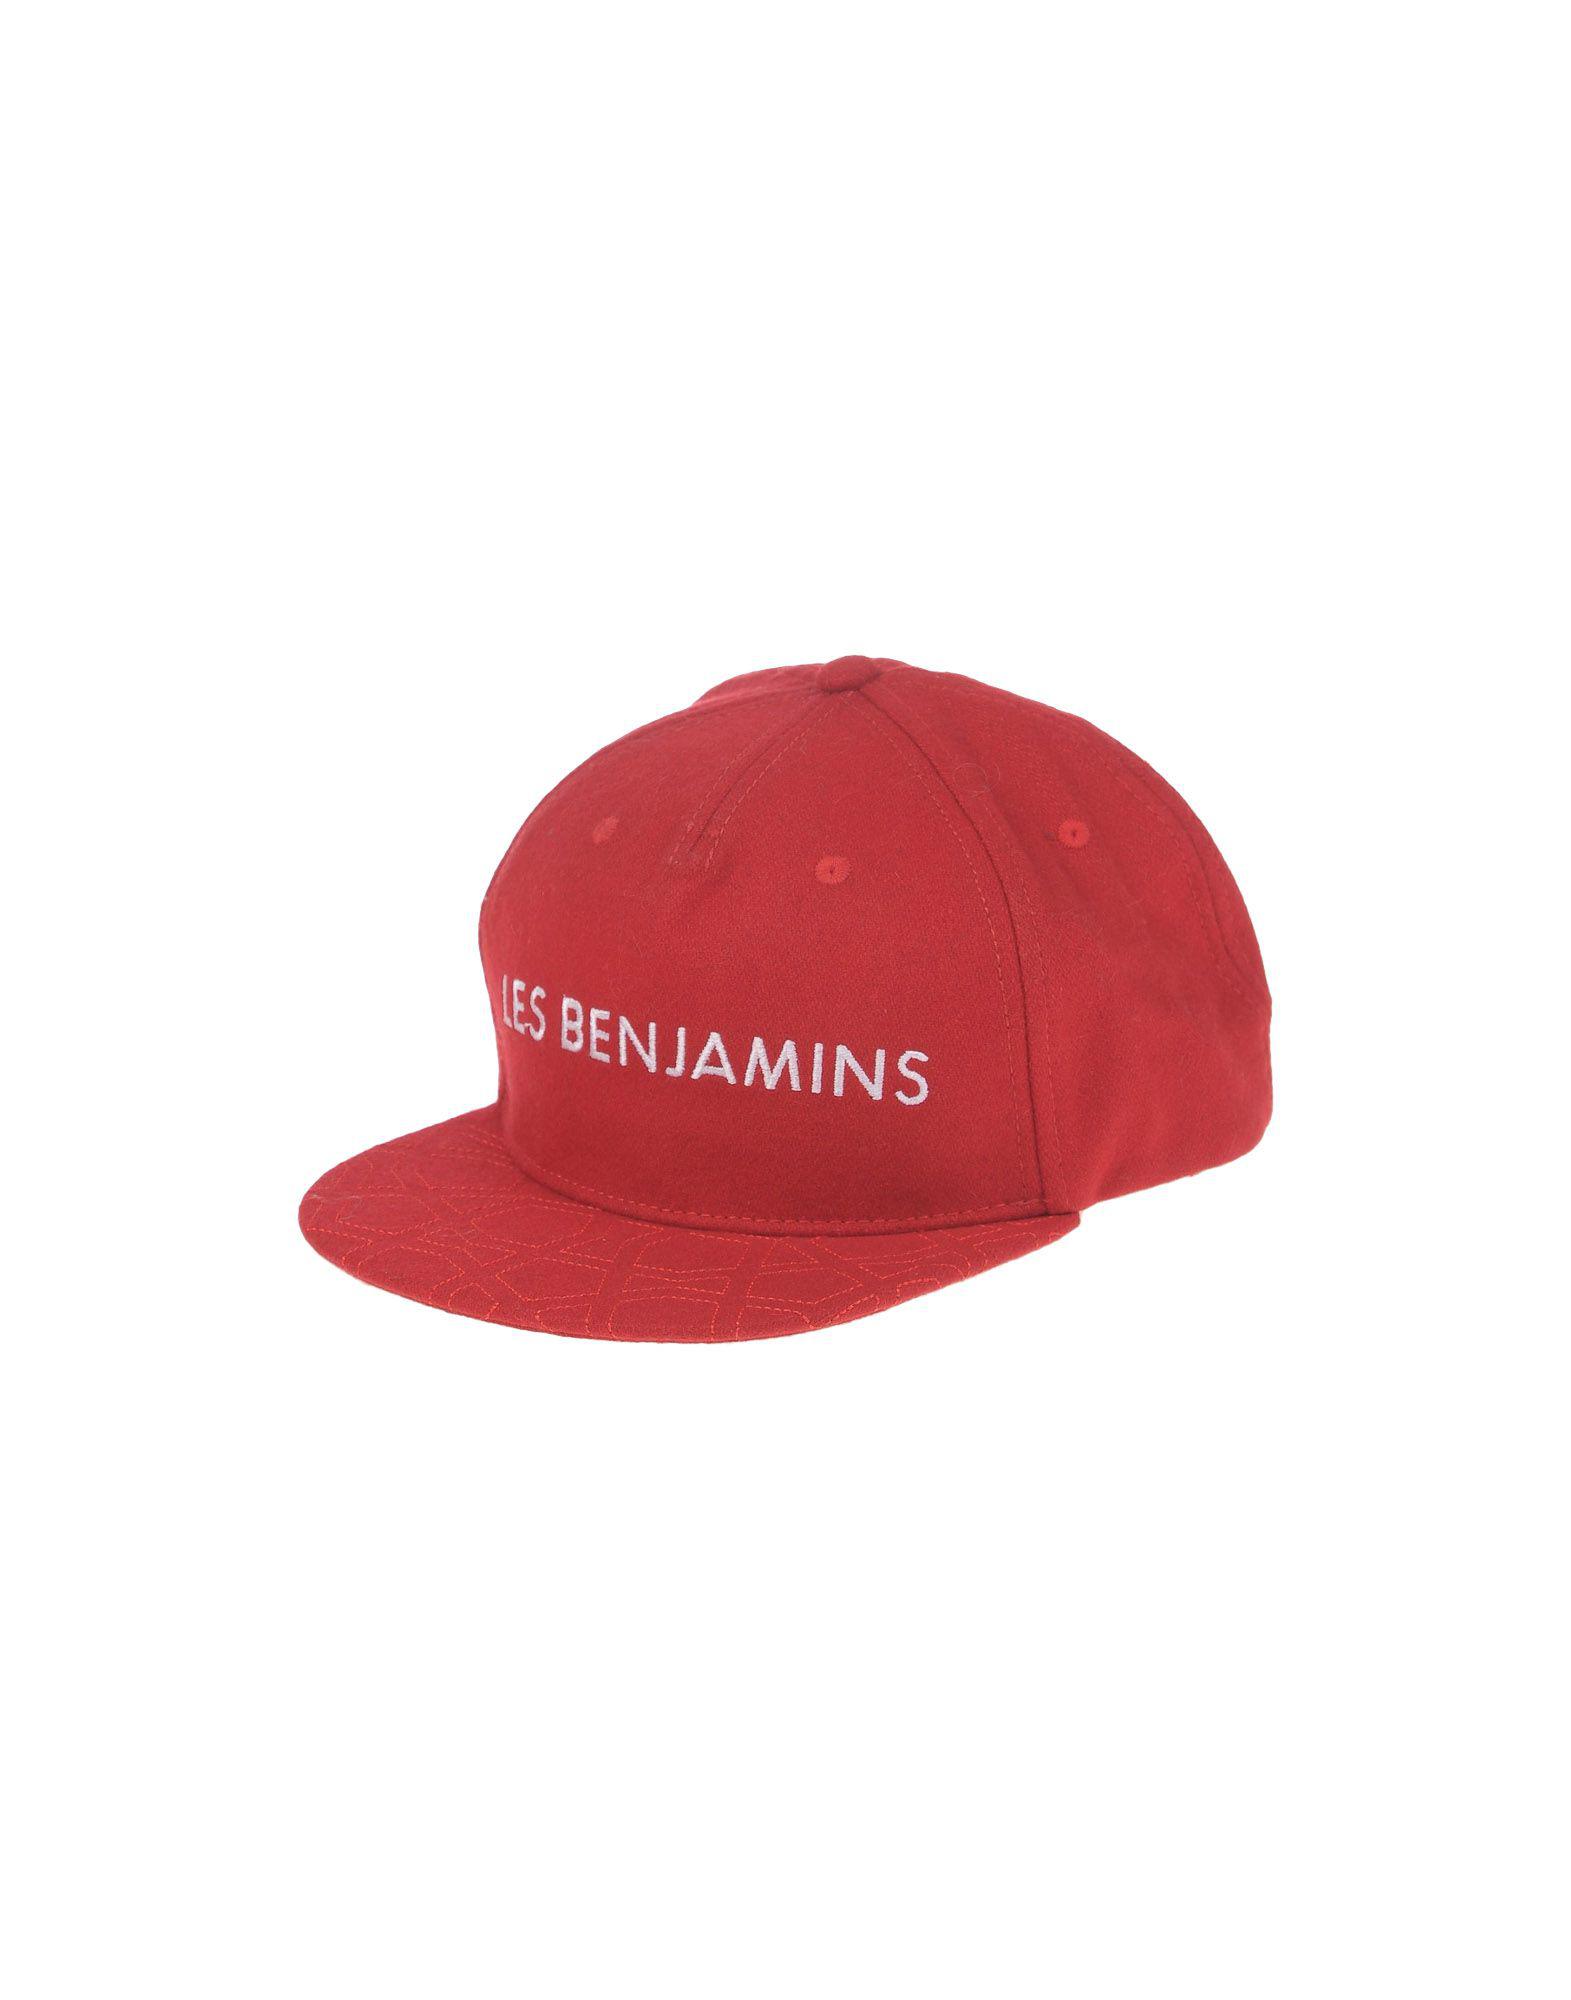 Les Benjamins Flannel Hat in Red for Men - Lyst